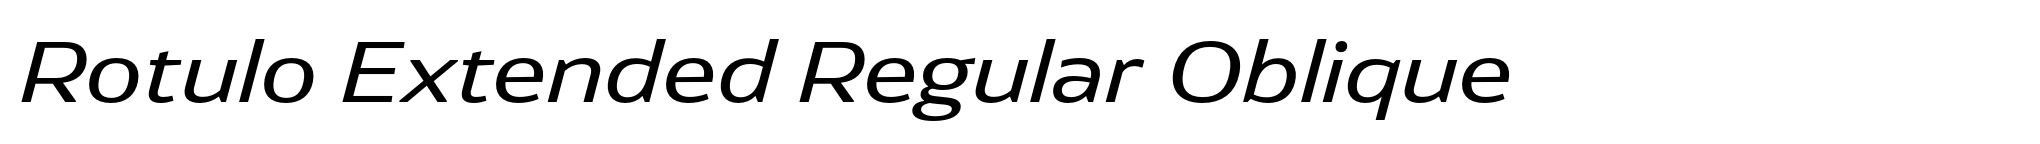 Rotulo Extended Regular Oblique image